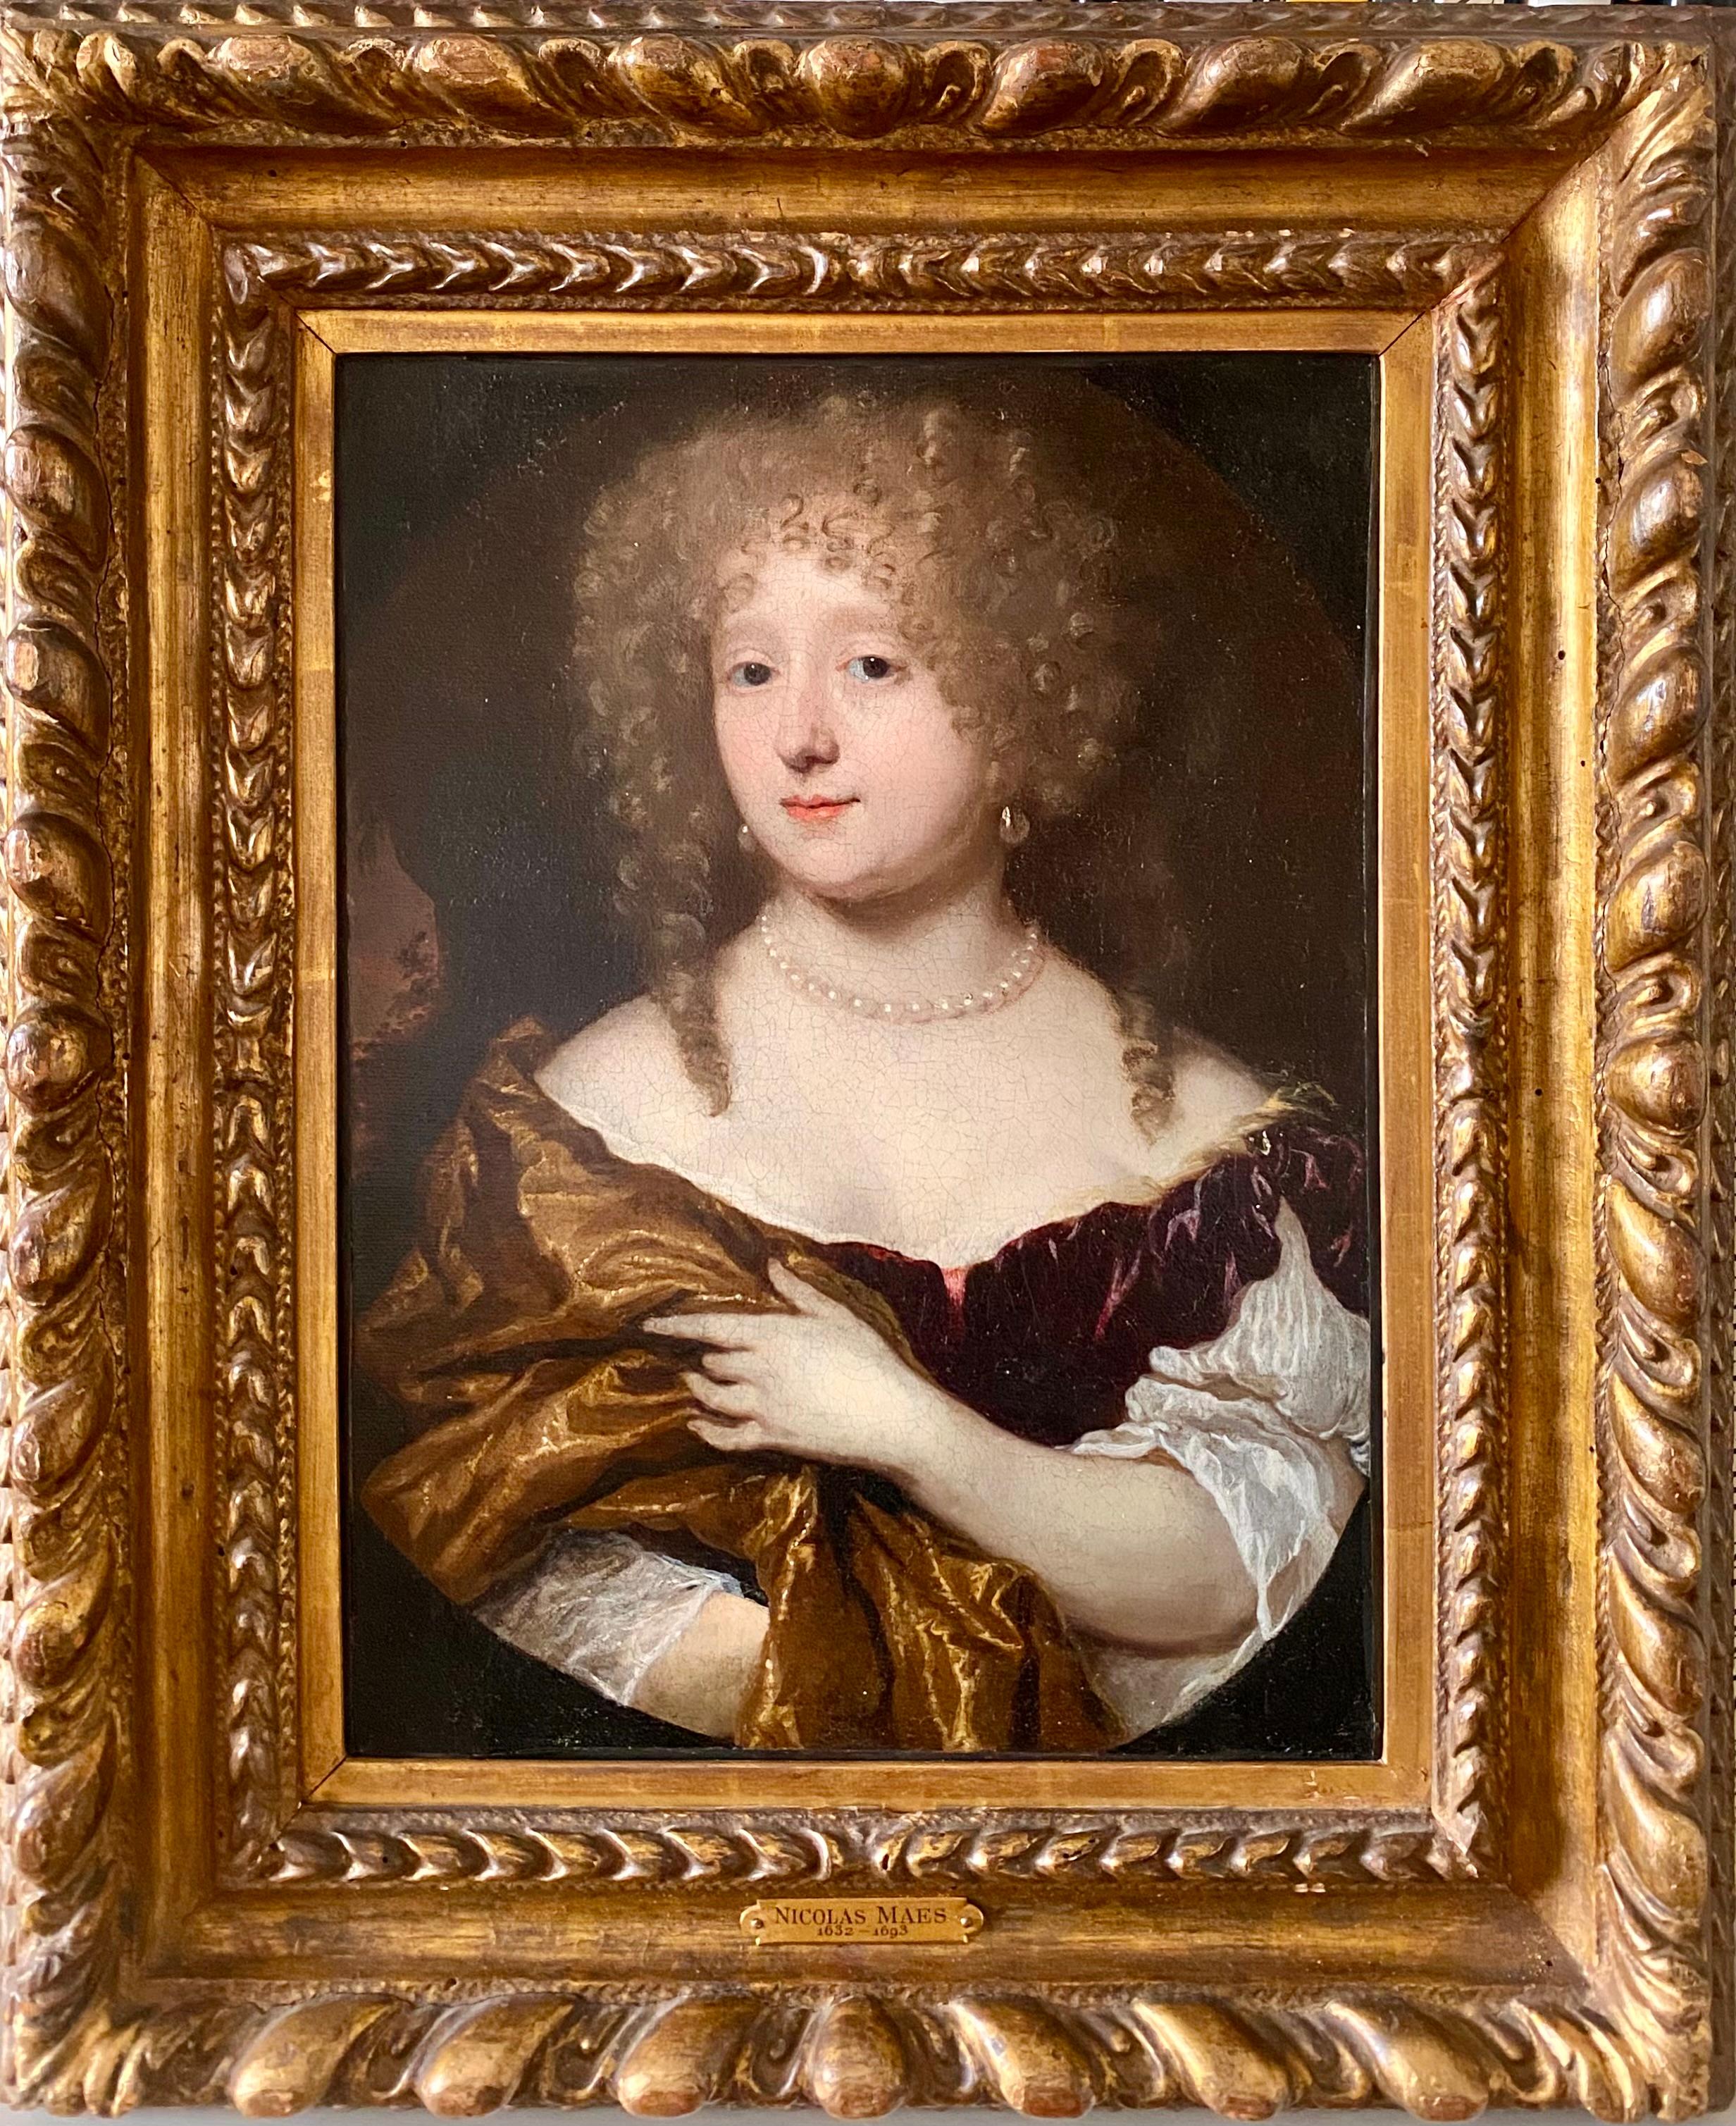 Nicolaes Maes Portrait Painting - 17th century portrait of a lady